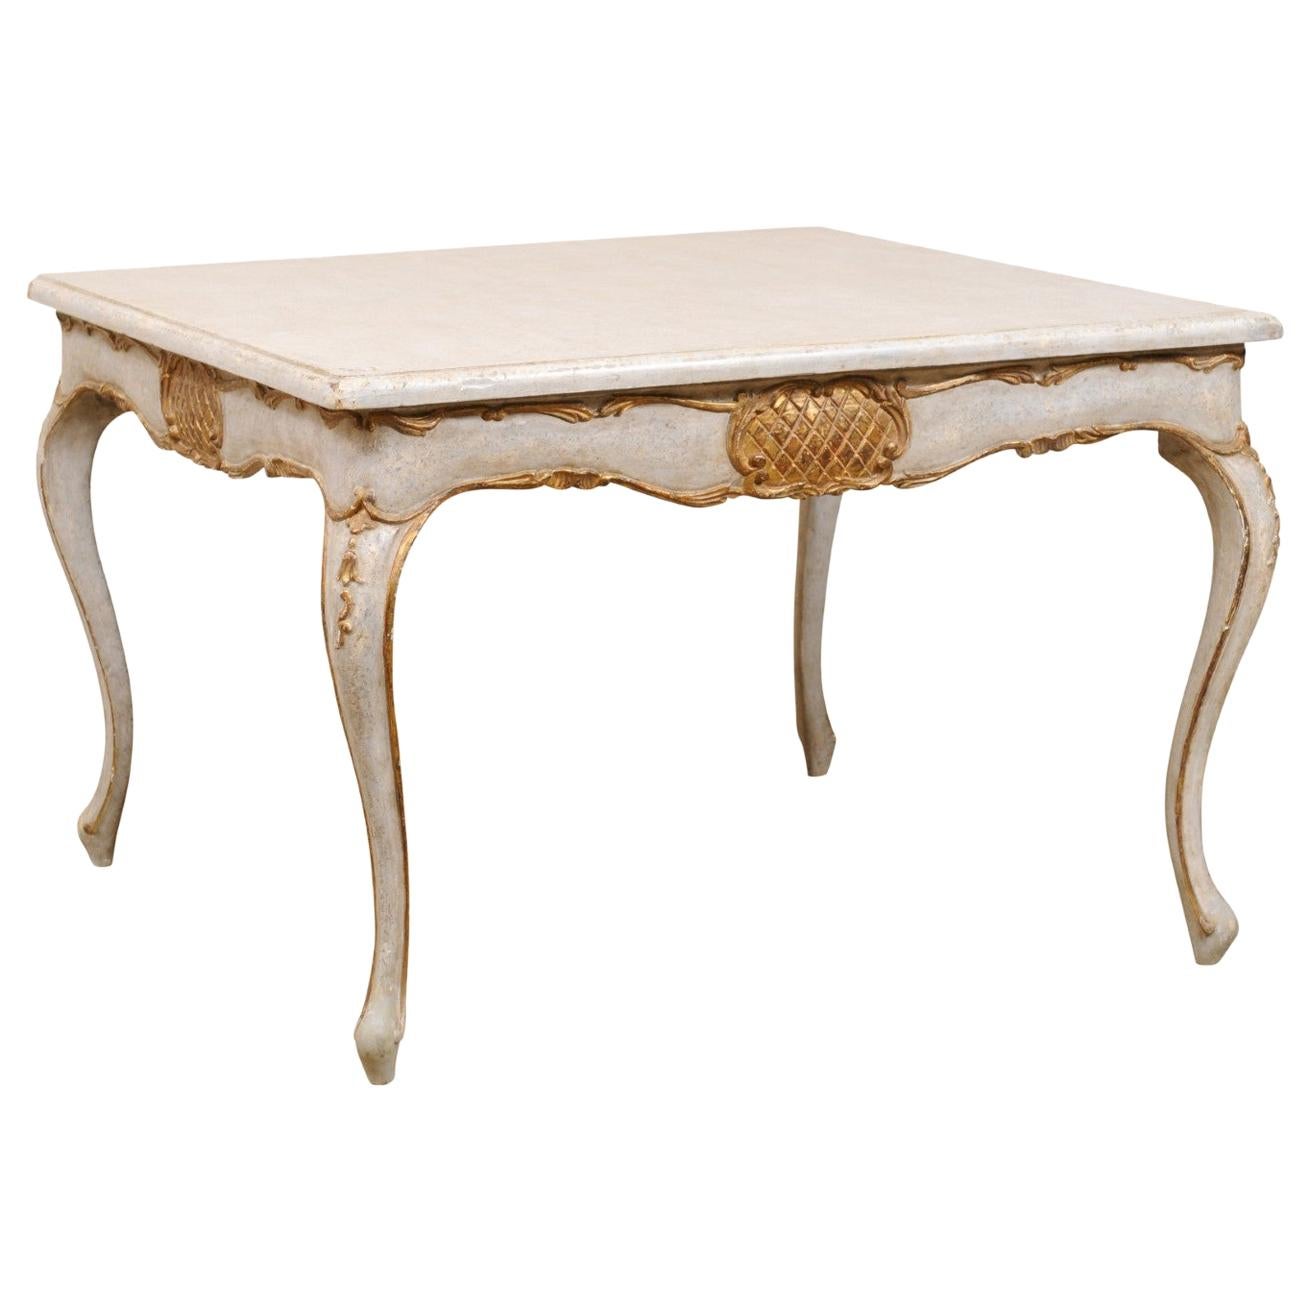 Italian Square-Shaped Wood Table w/ Elegant Legs, Scalloped Skirt & Gilt Accents